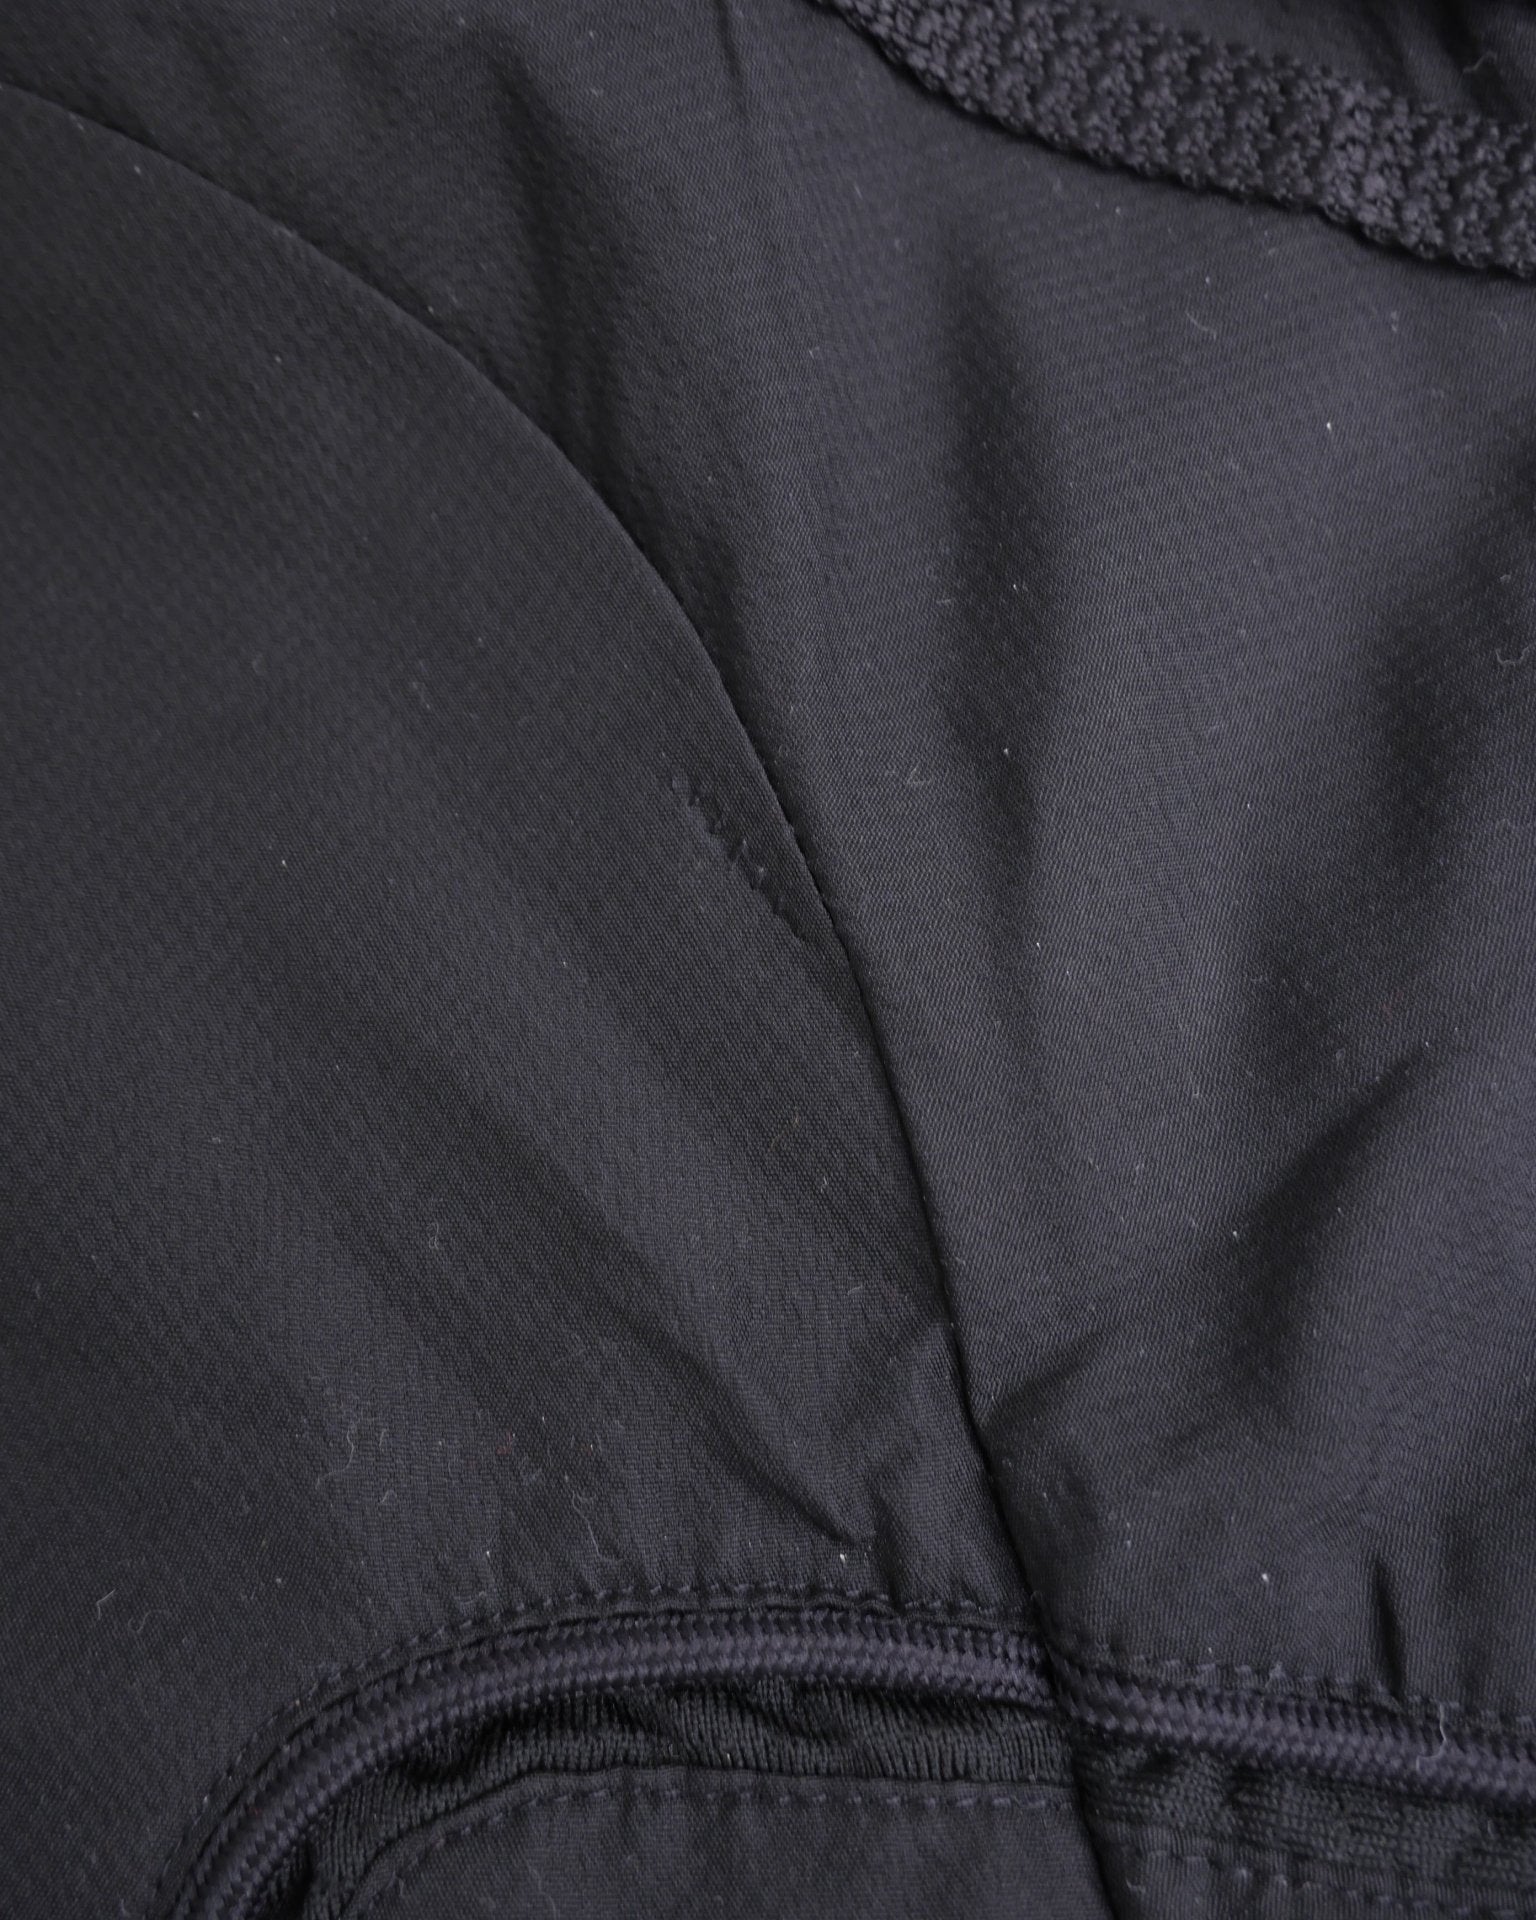 Adidas printed Logo black Track Jacket - Peeces